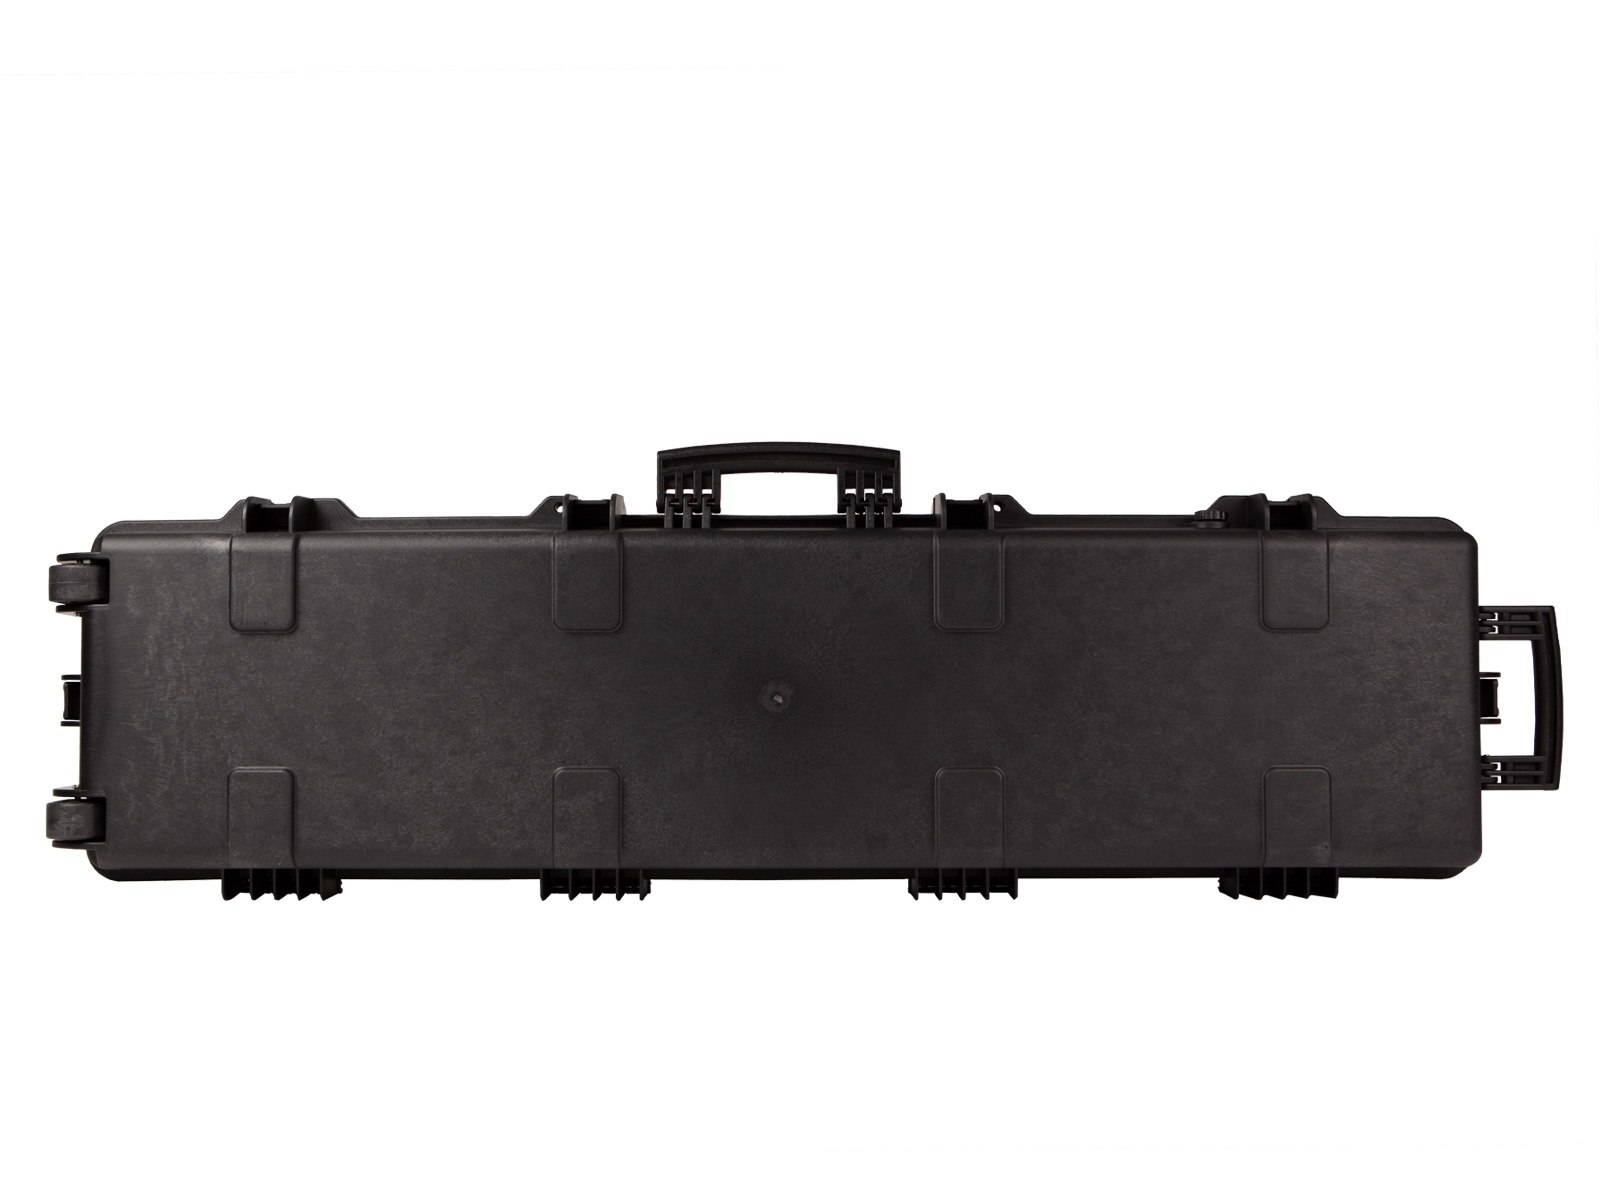 ASG Gun case trolley 138x39x15cm